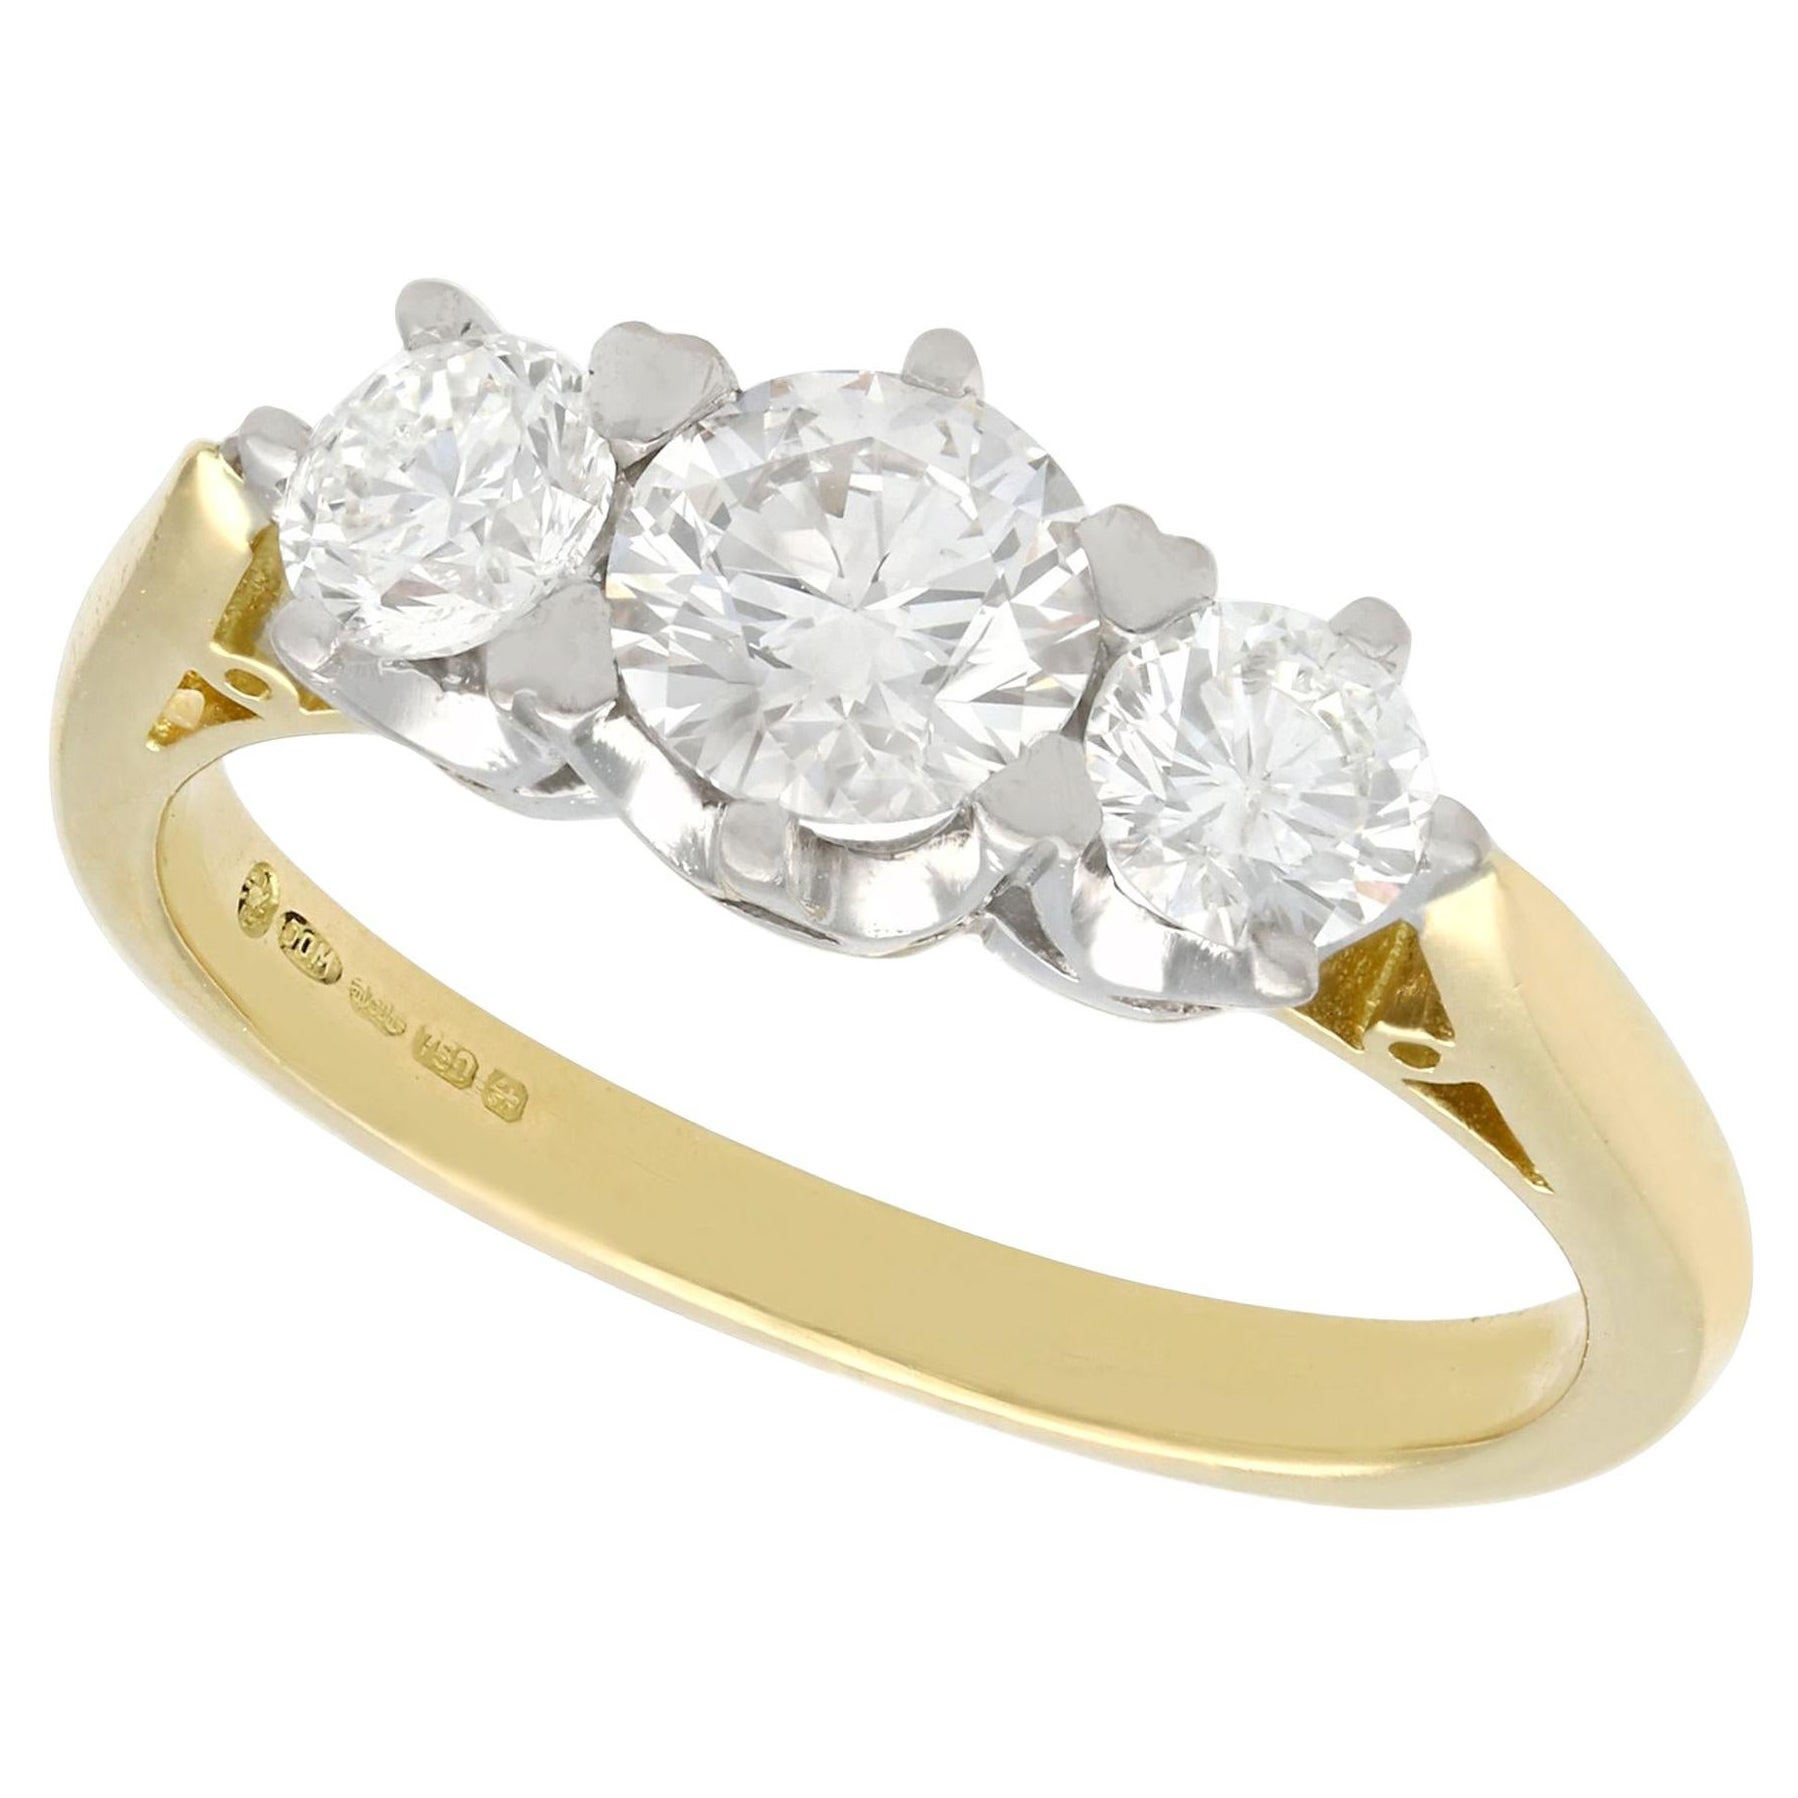 Vintage 1.18 Carat Diamond Three Stone Engagement Ring in 18k Yellow Gold